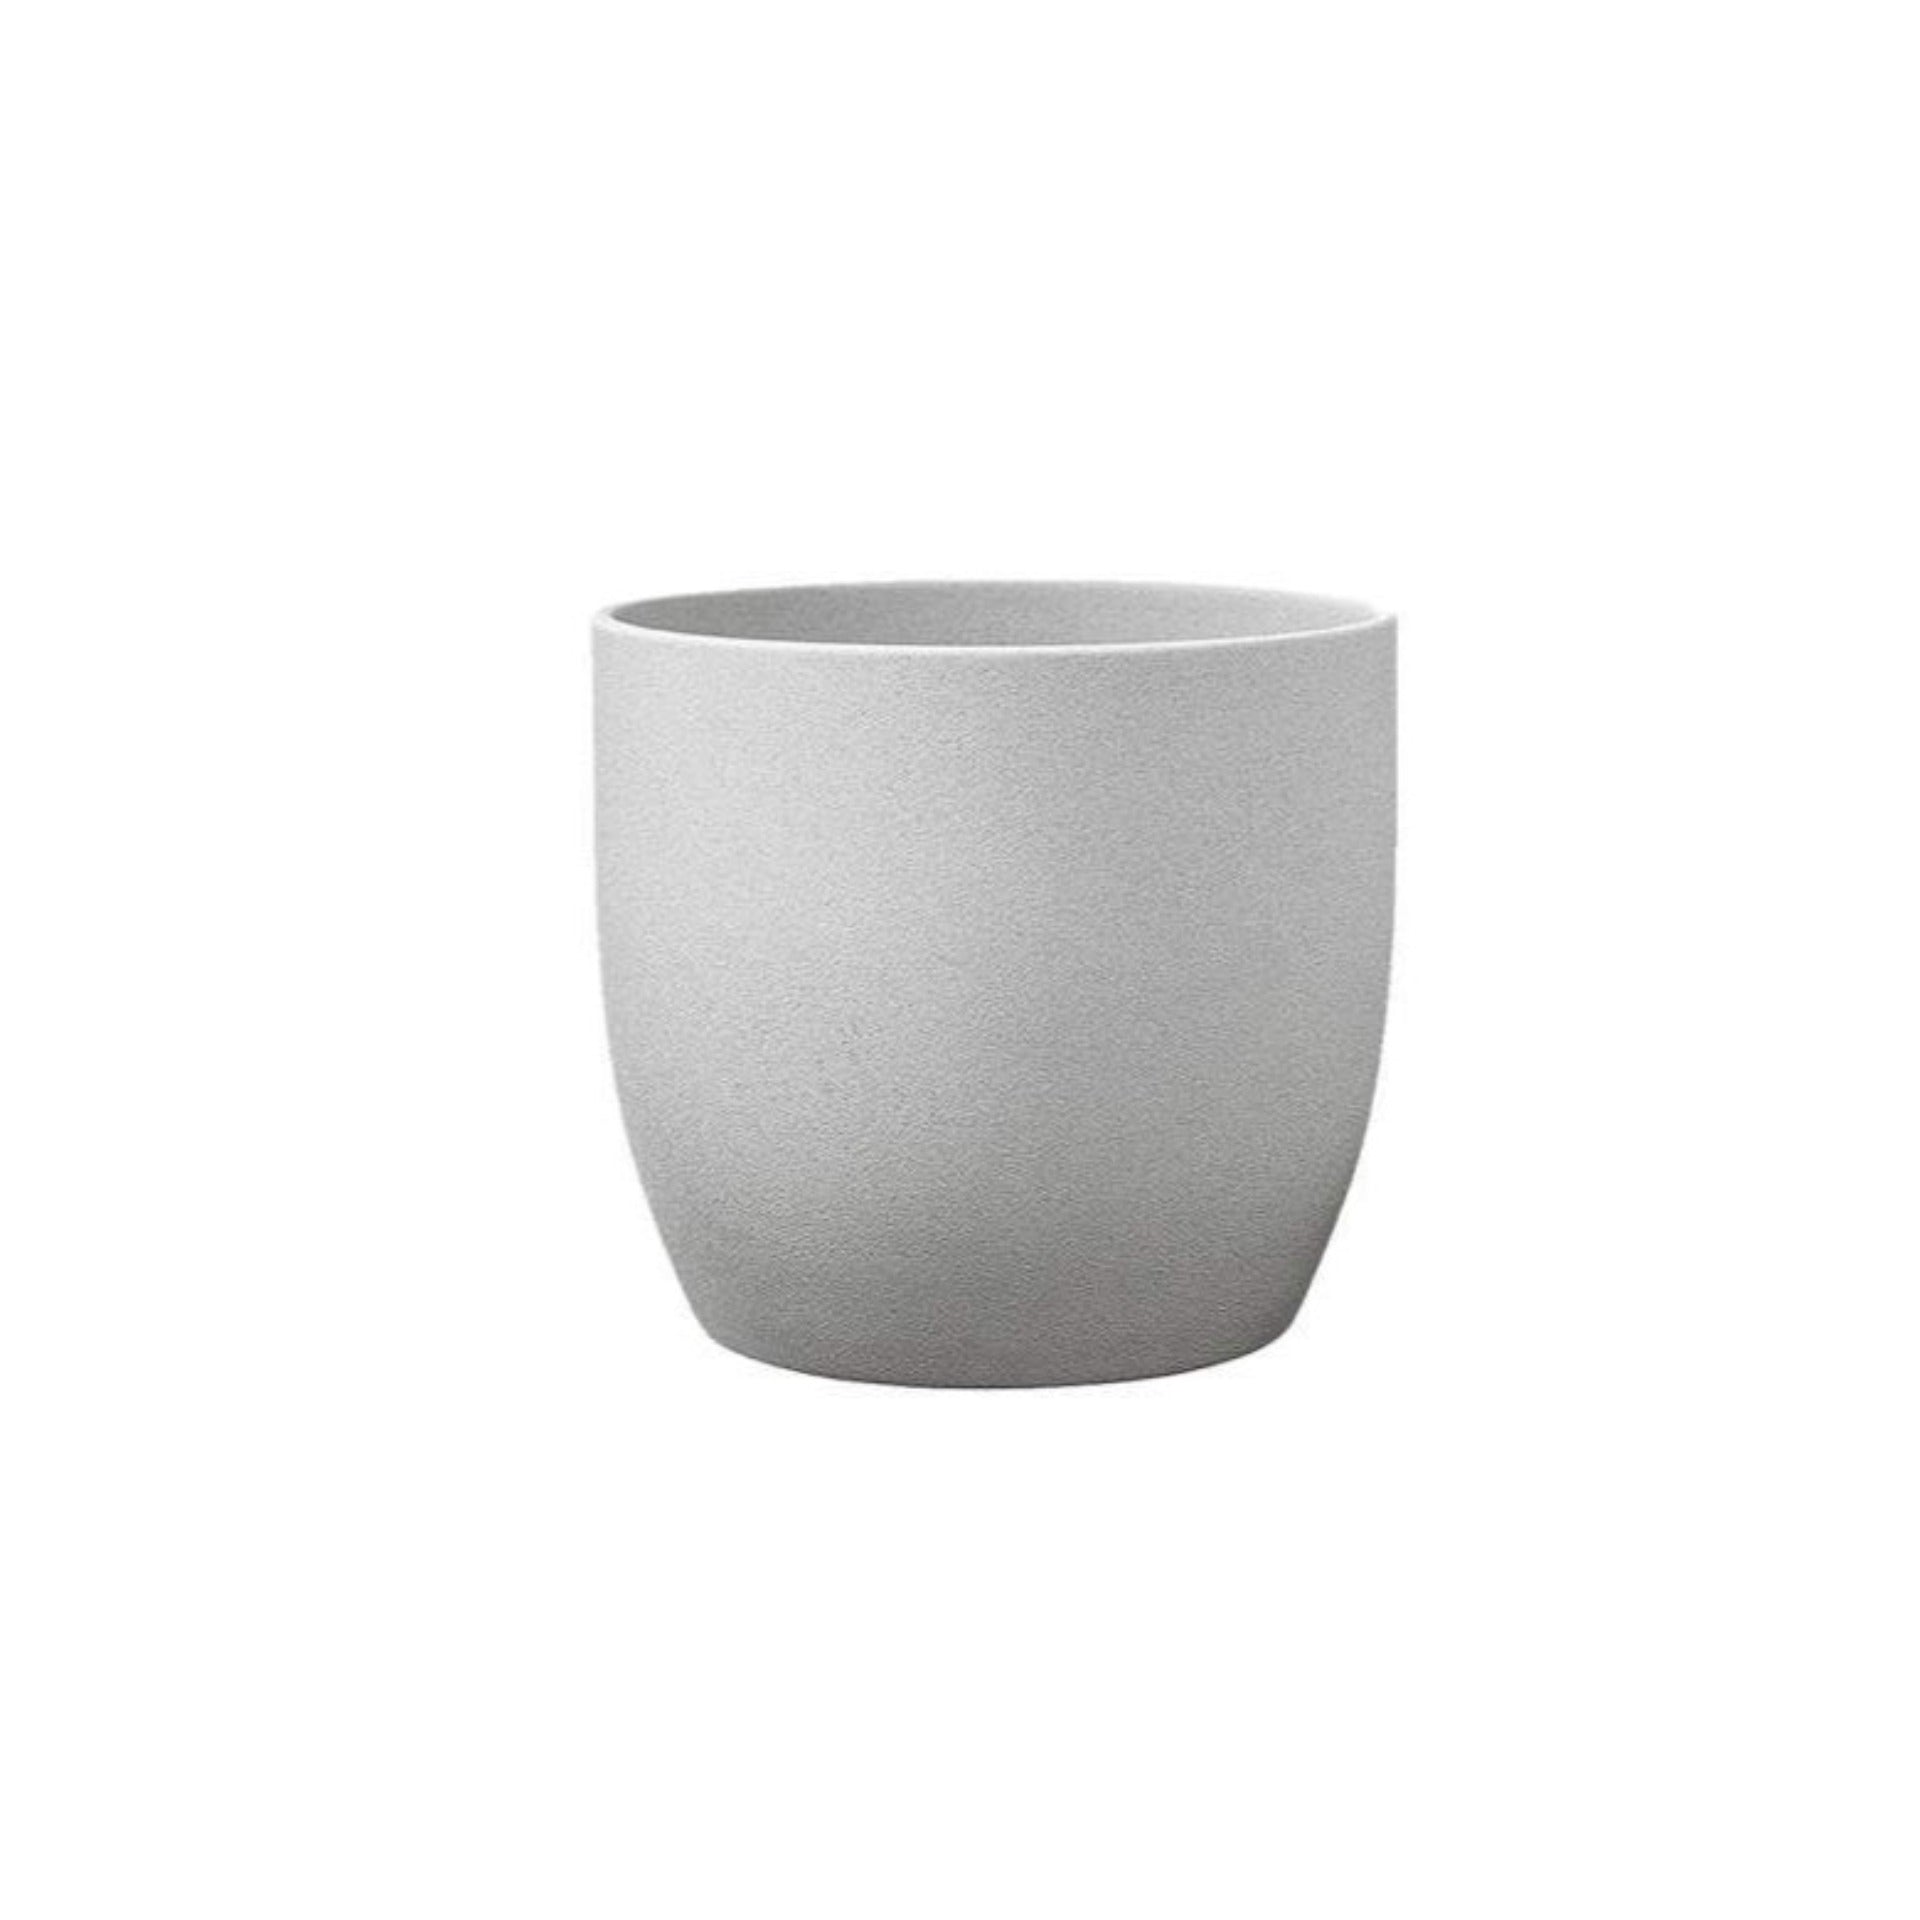 Basel Pot Light Grey Stone 12 x 10 cm / 5 x 4